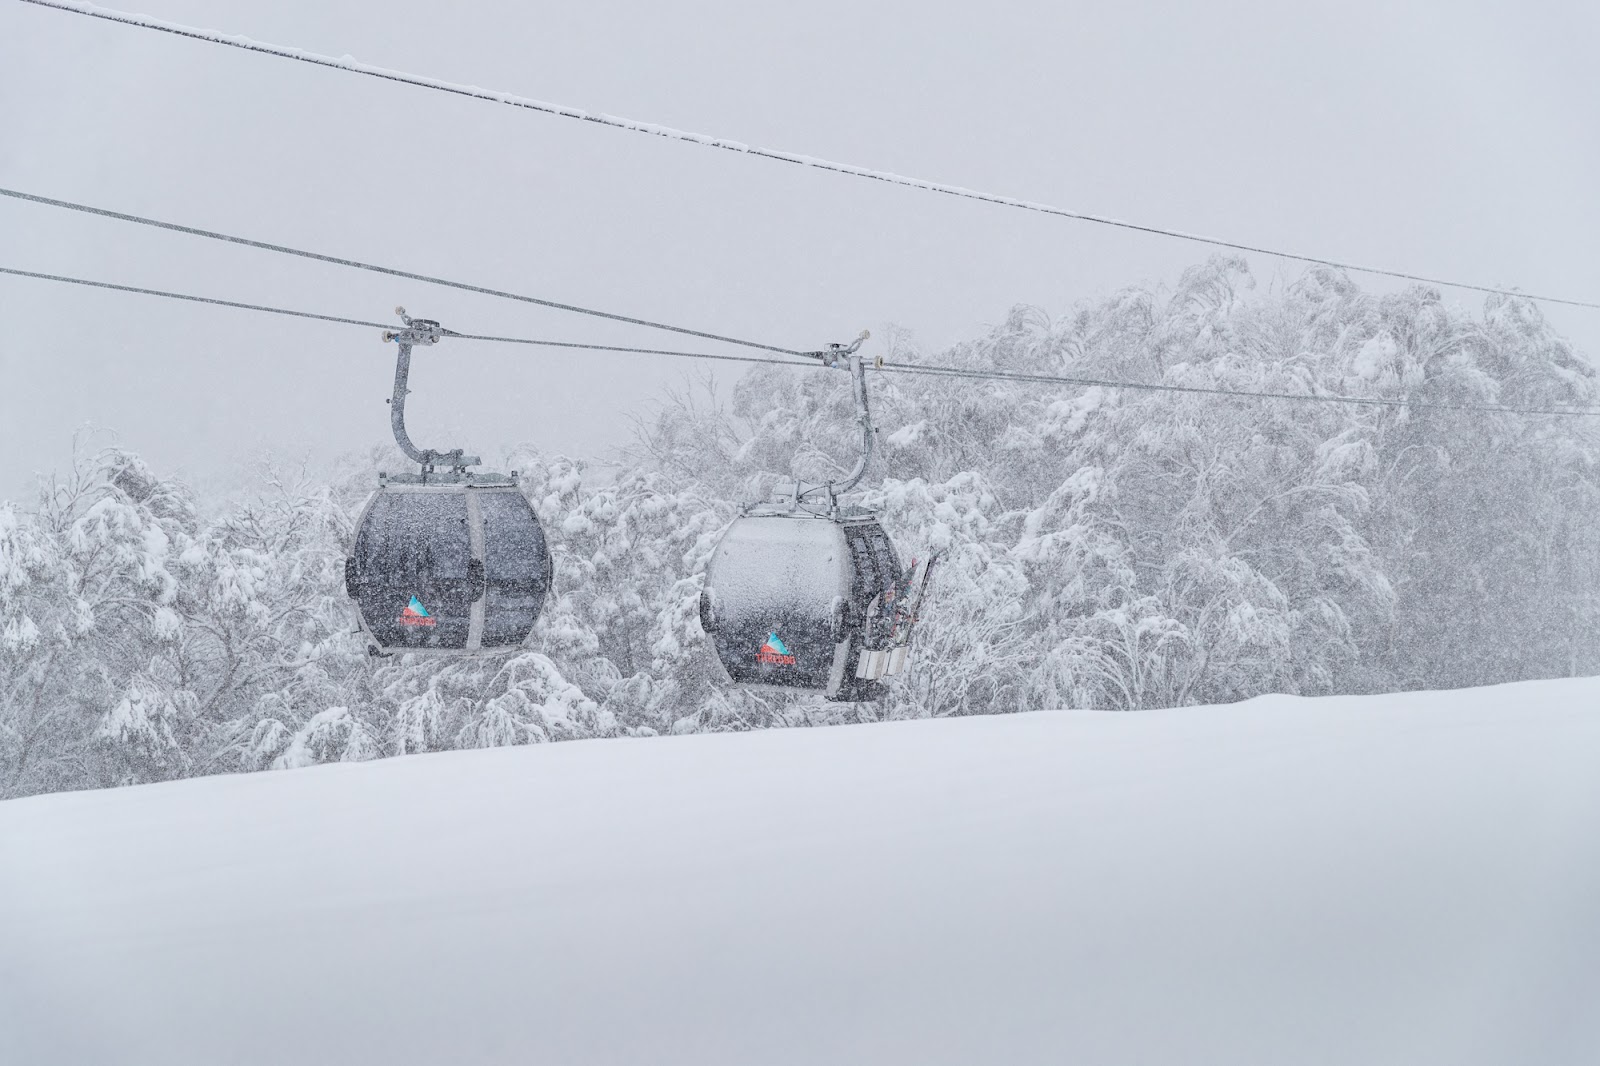 gondolas operating under snowy weather